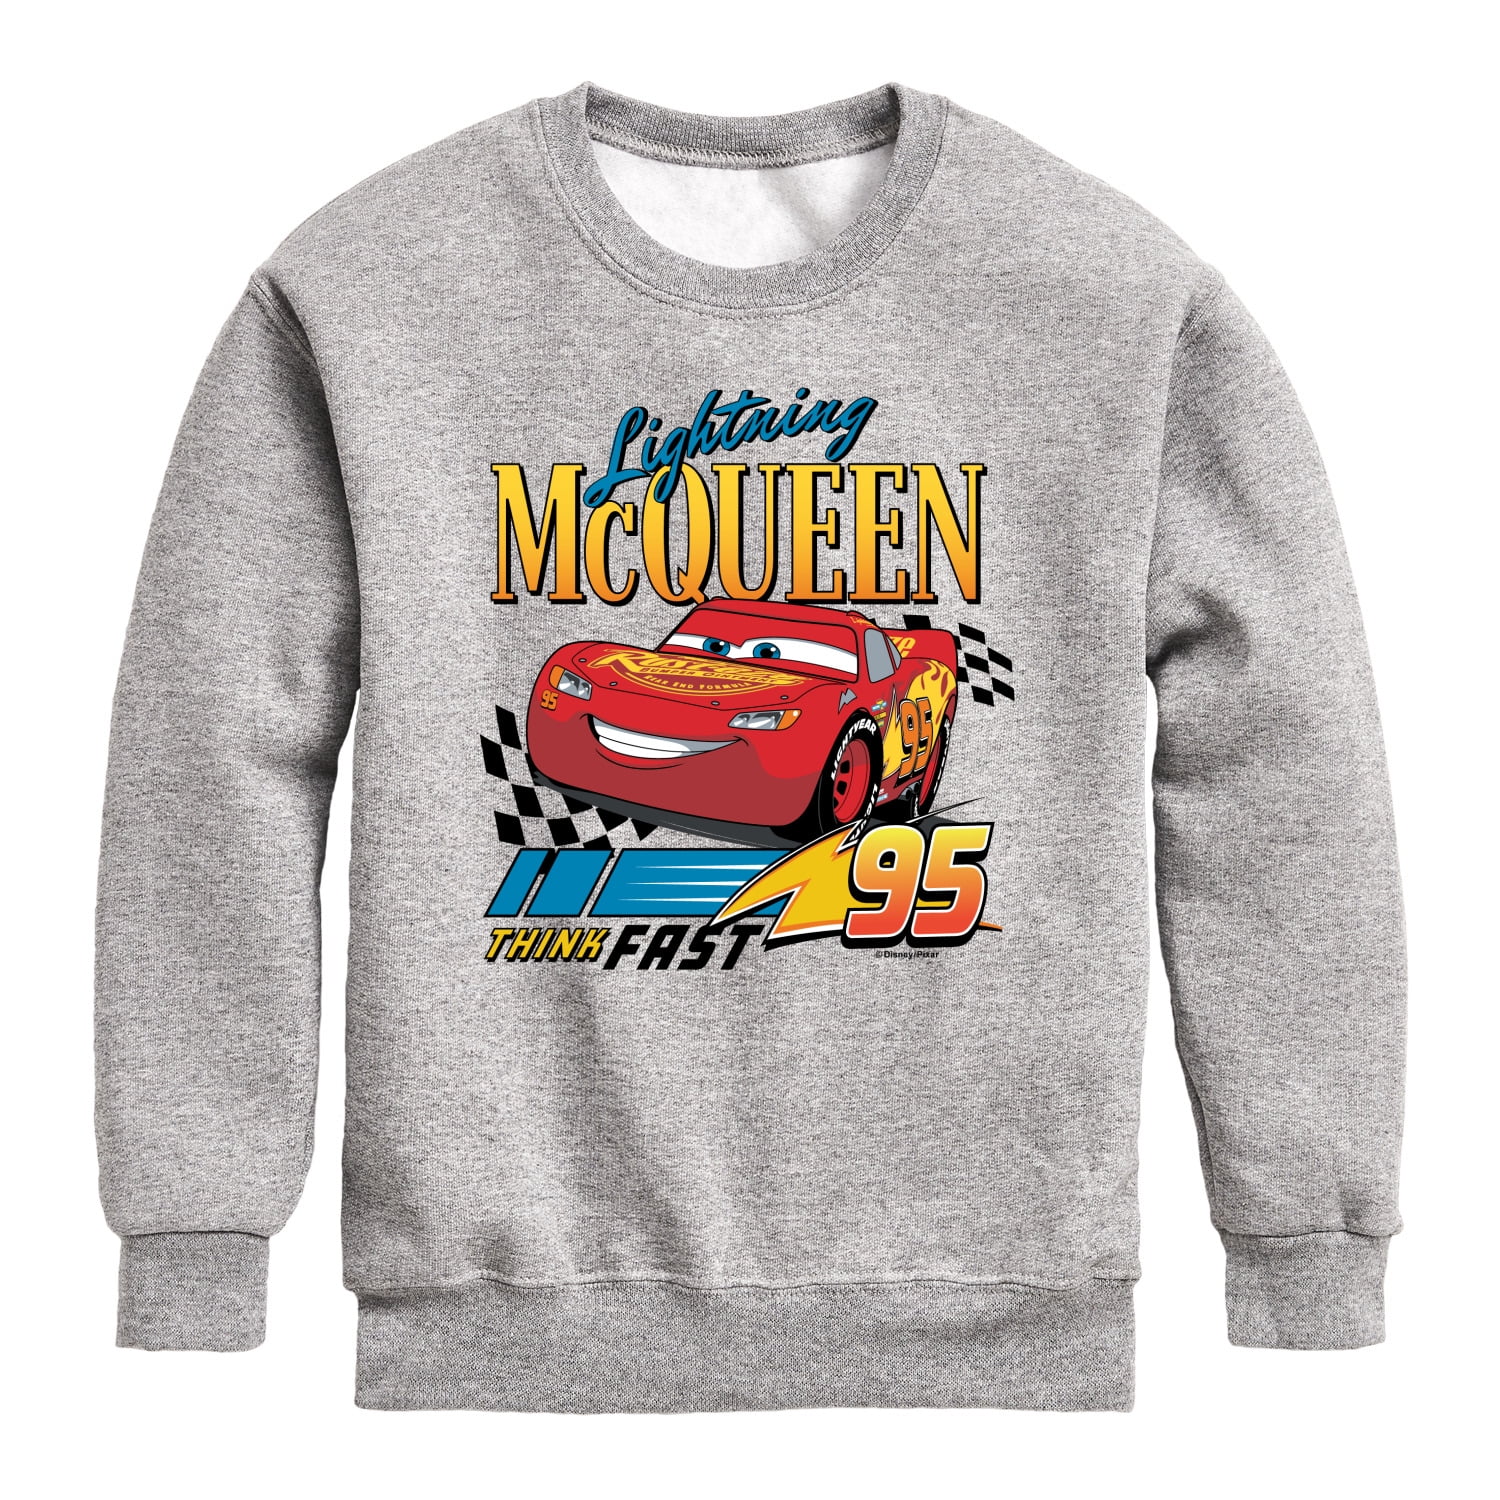 Disney's Cars - Lightning McQueen Think Fast - Toddler And Youth Crewneck  Fleece Sweatshirt